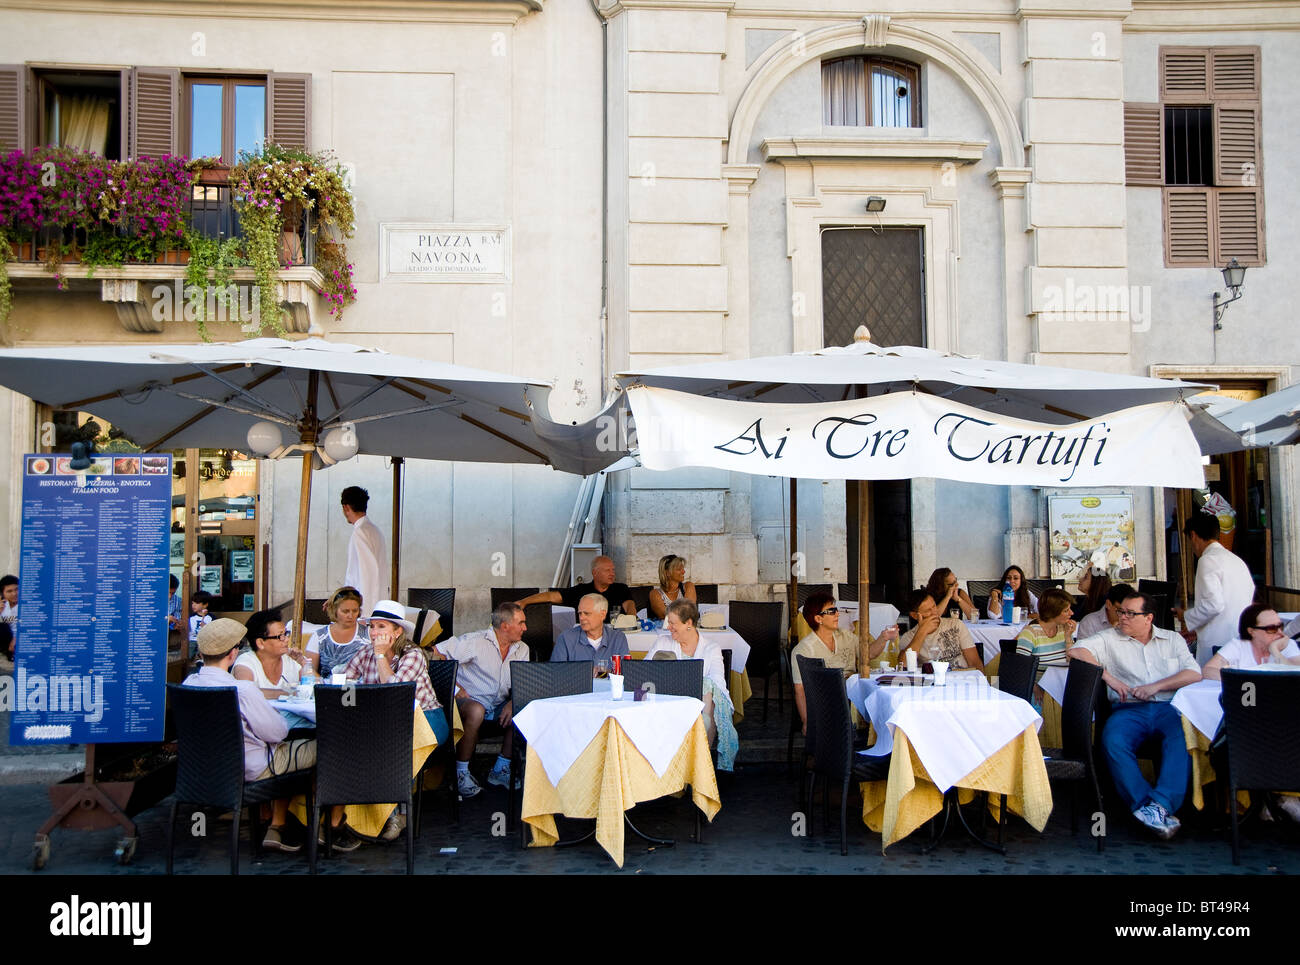 Cafe Ai tre Tartufi, Piazza Navona, Rome Stock Photo